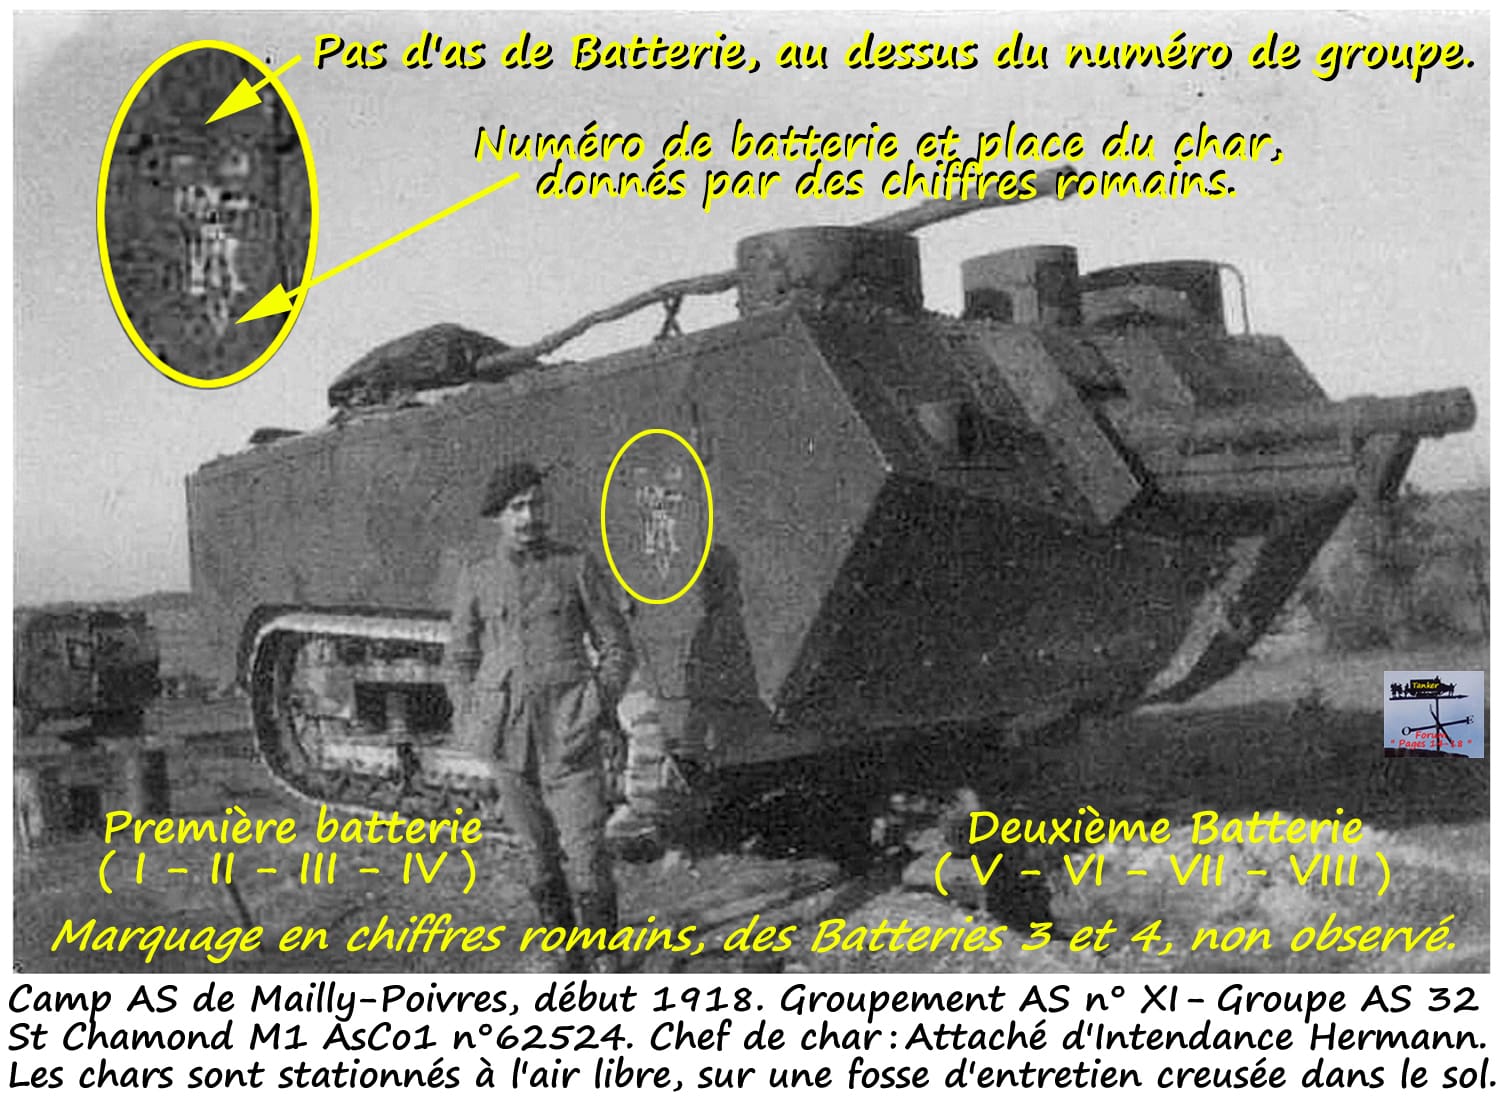 Grpt XI - AS 32 - St Chamond M1 AsCo1 n° 62524 01)-min.jpg